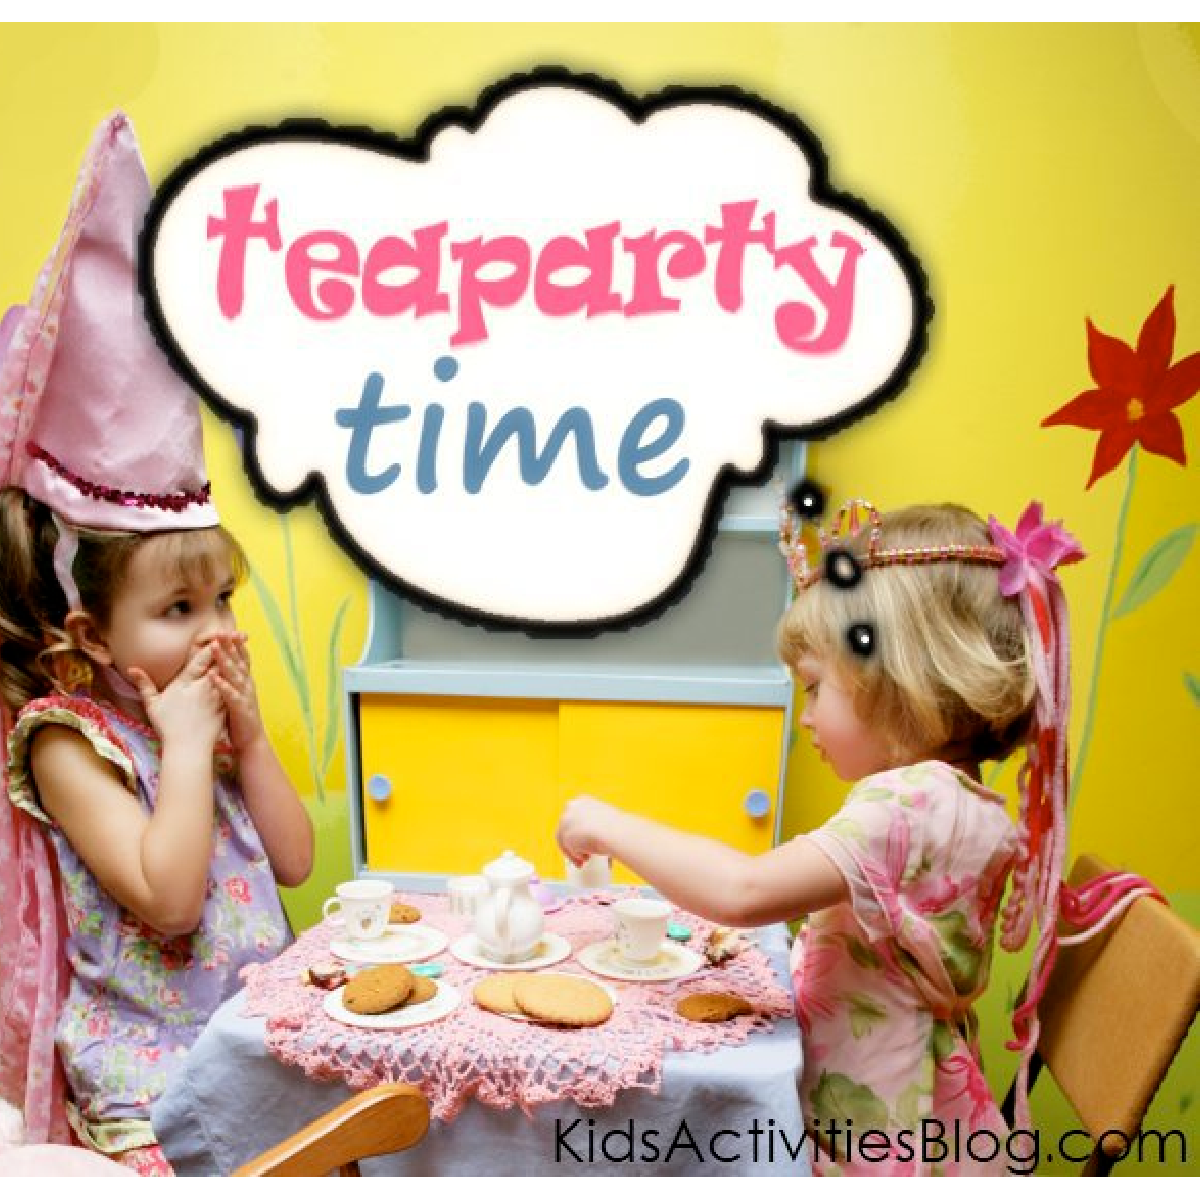 dress up ideas- cute dress up tea party ideas with 2 girls having a tea party- kids activities blog